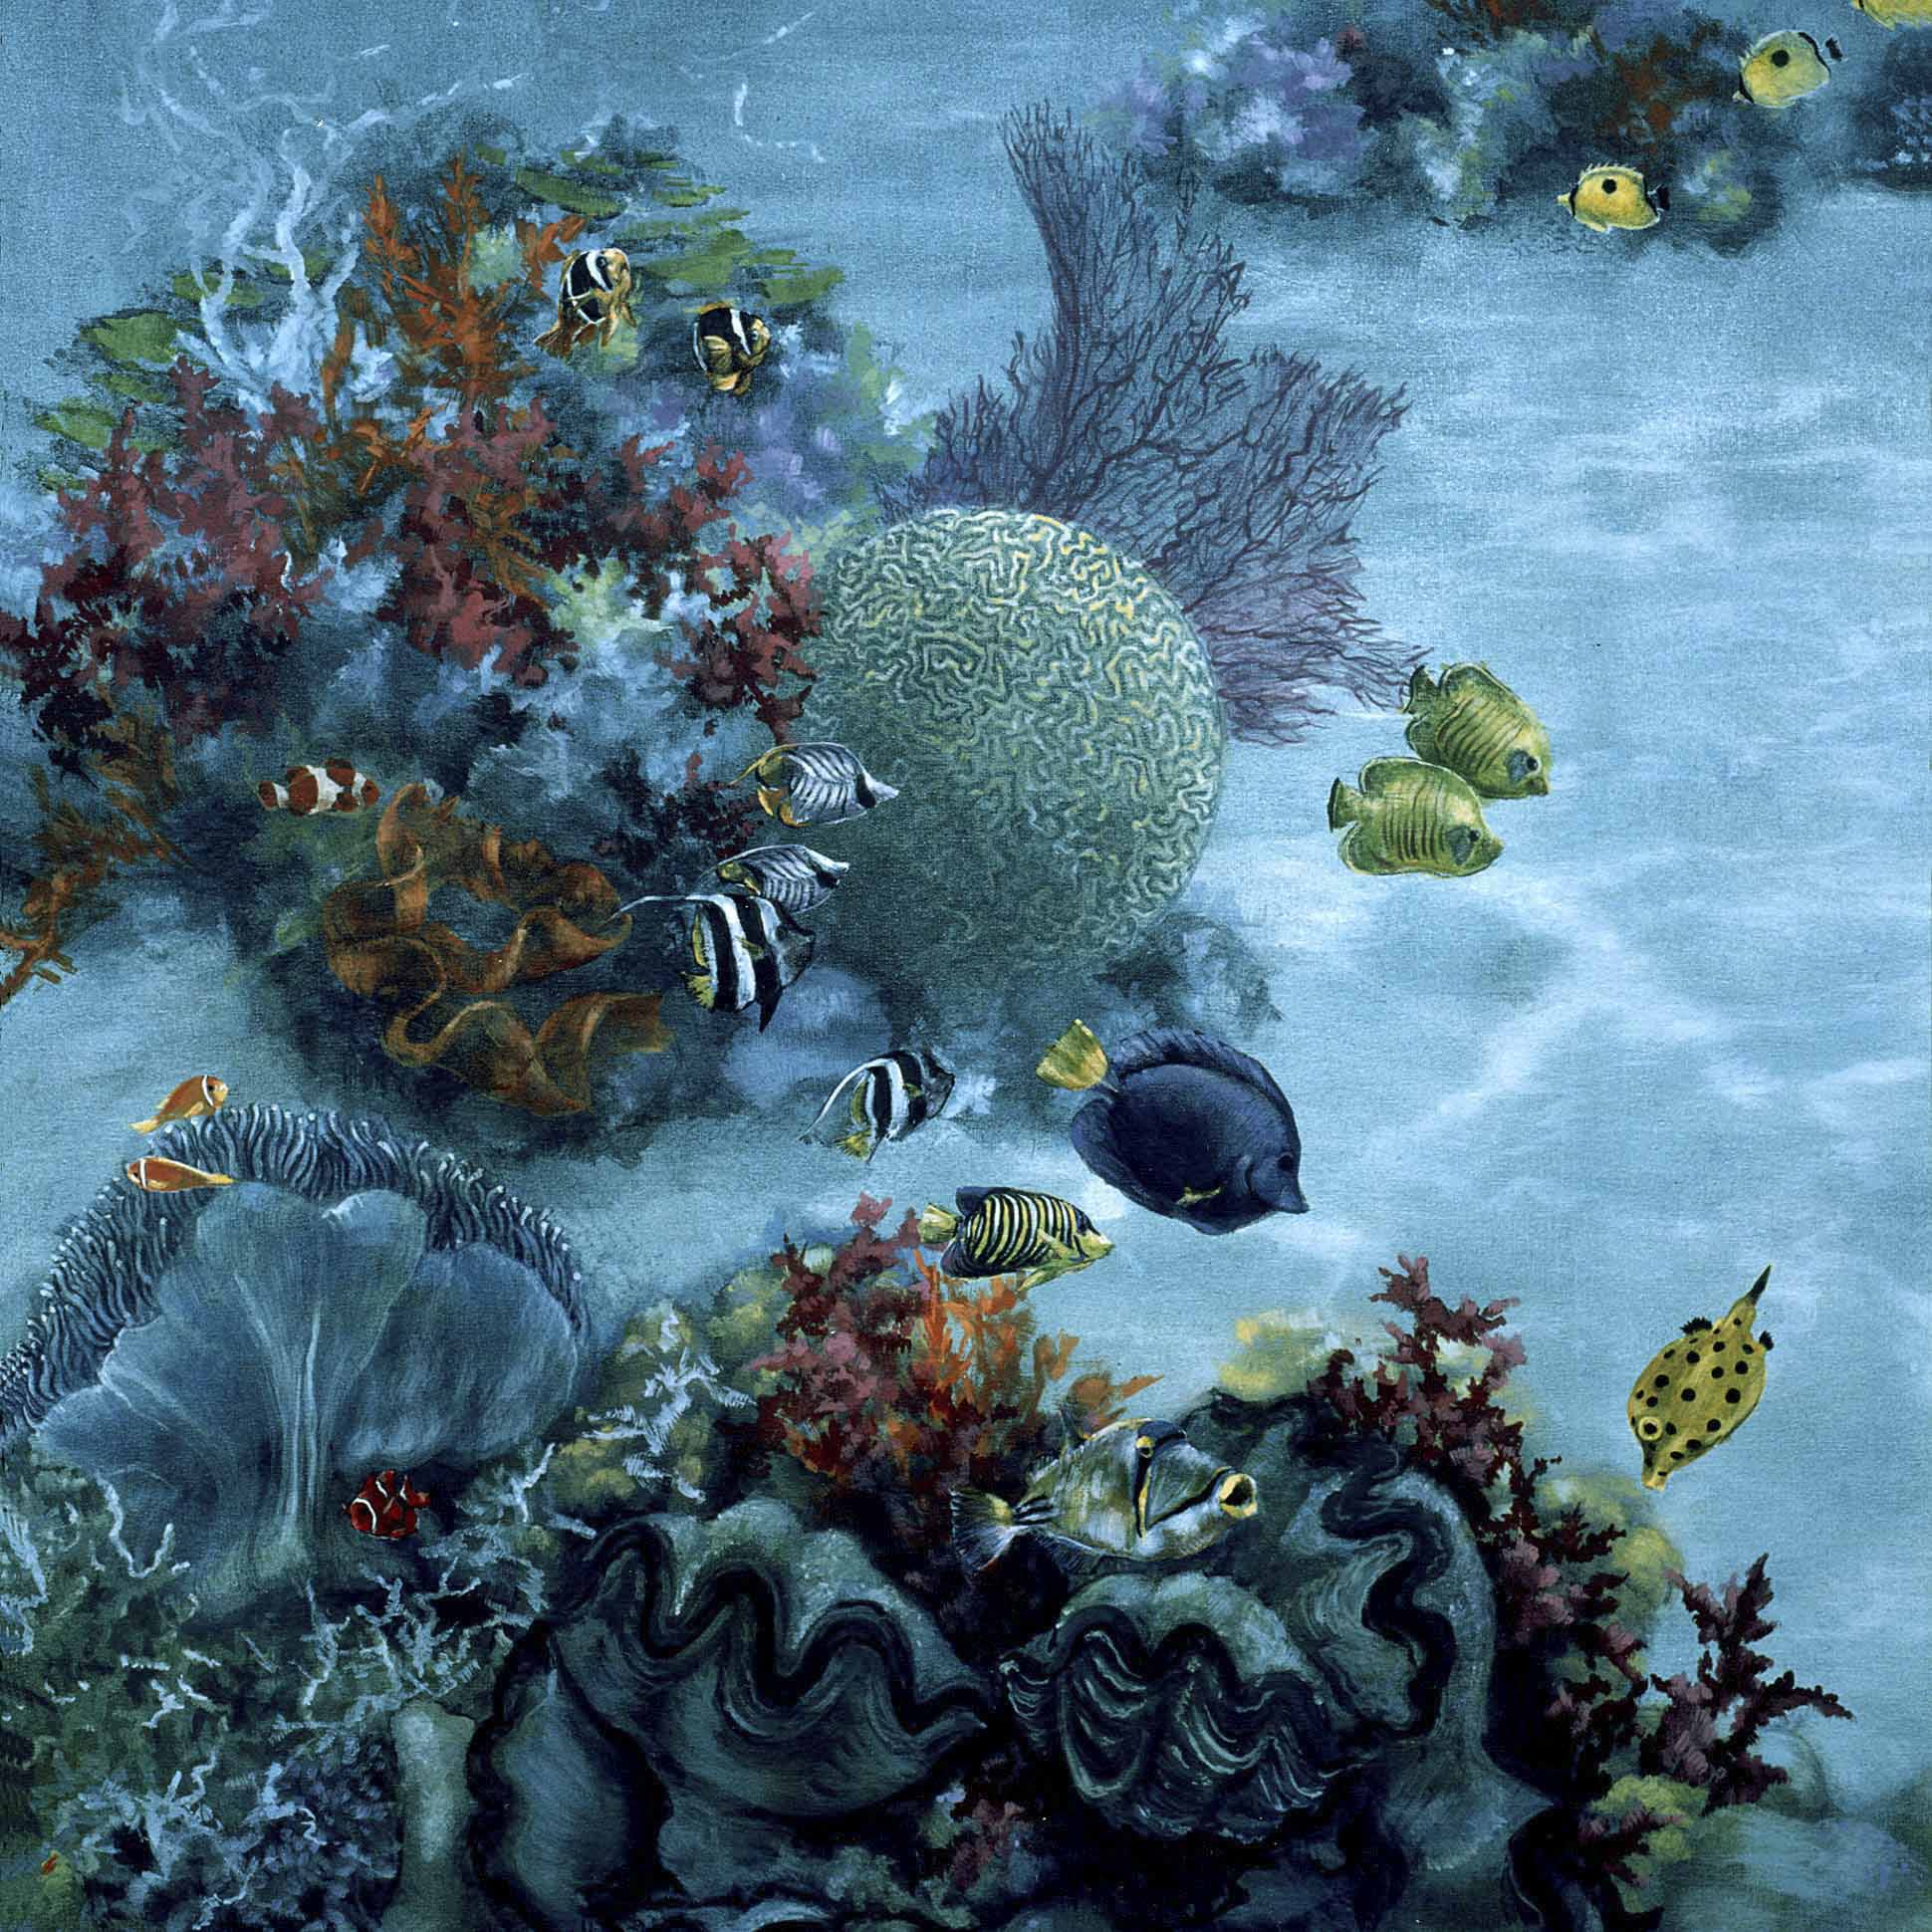 Coral reef and sea life design mural | © DKT Artworks